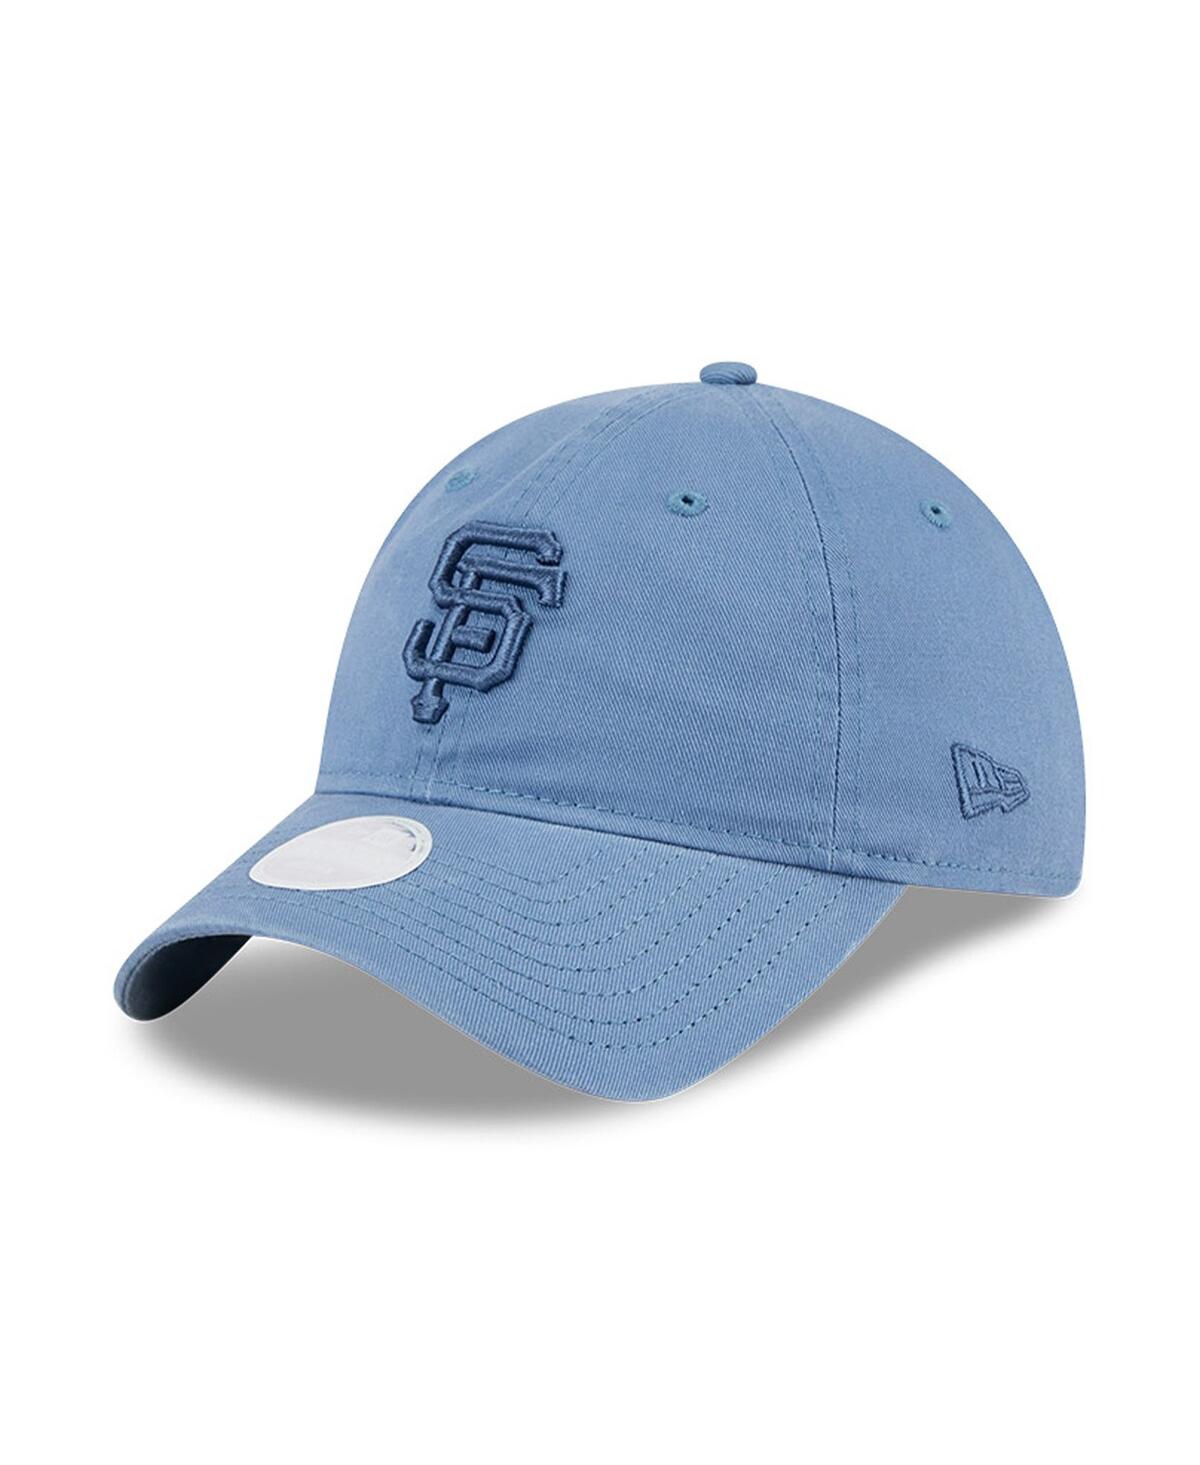 Shop New Era Women's San Francisco Giants Faded Blue 9twenty Adjustable Hat